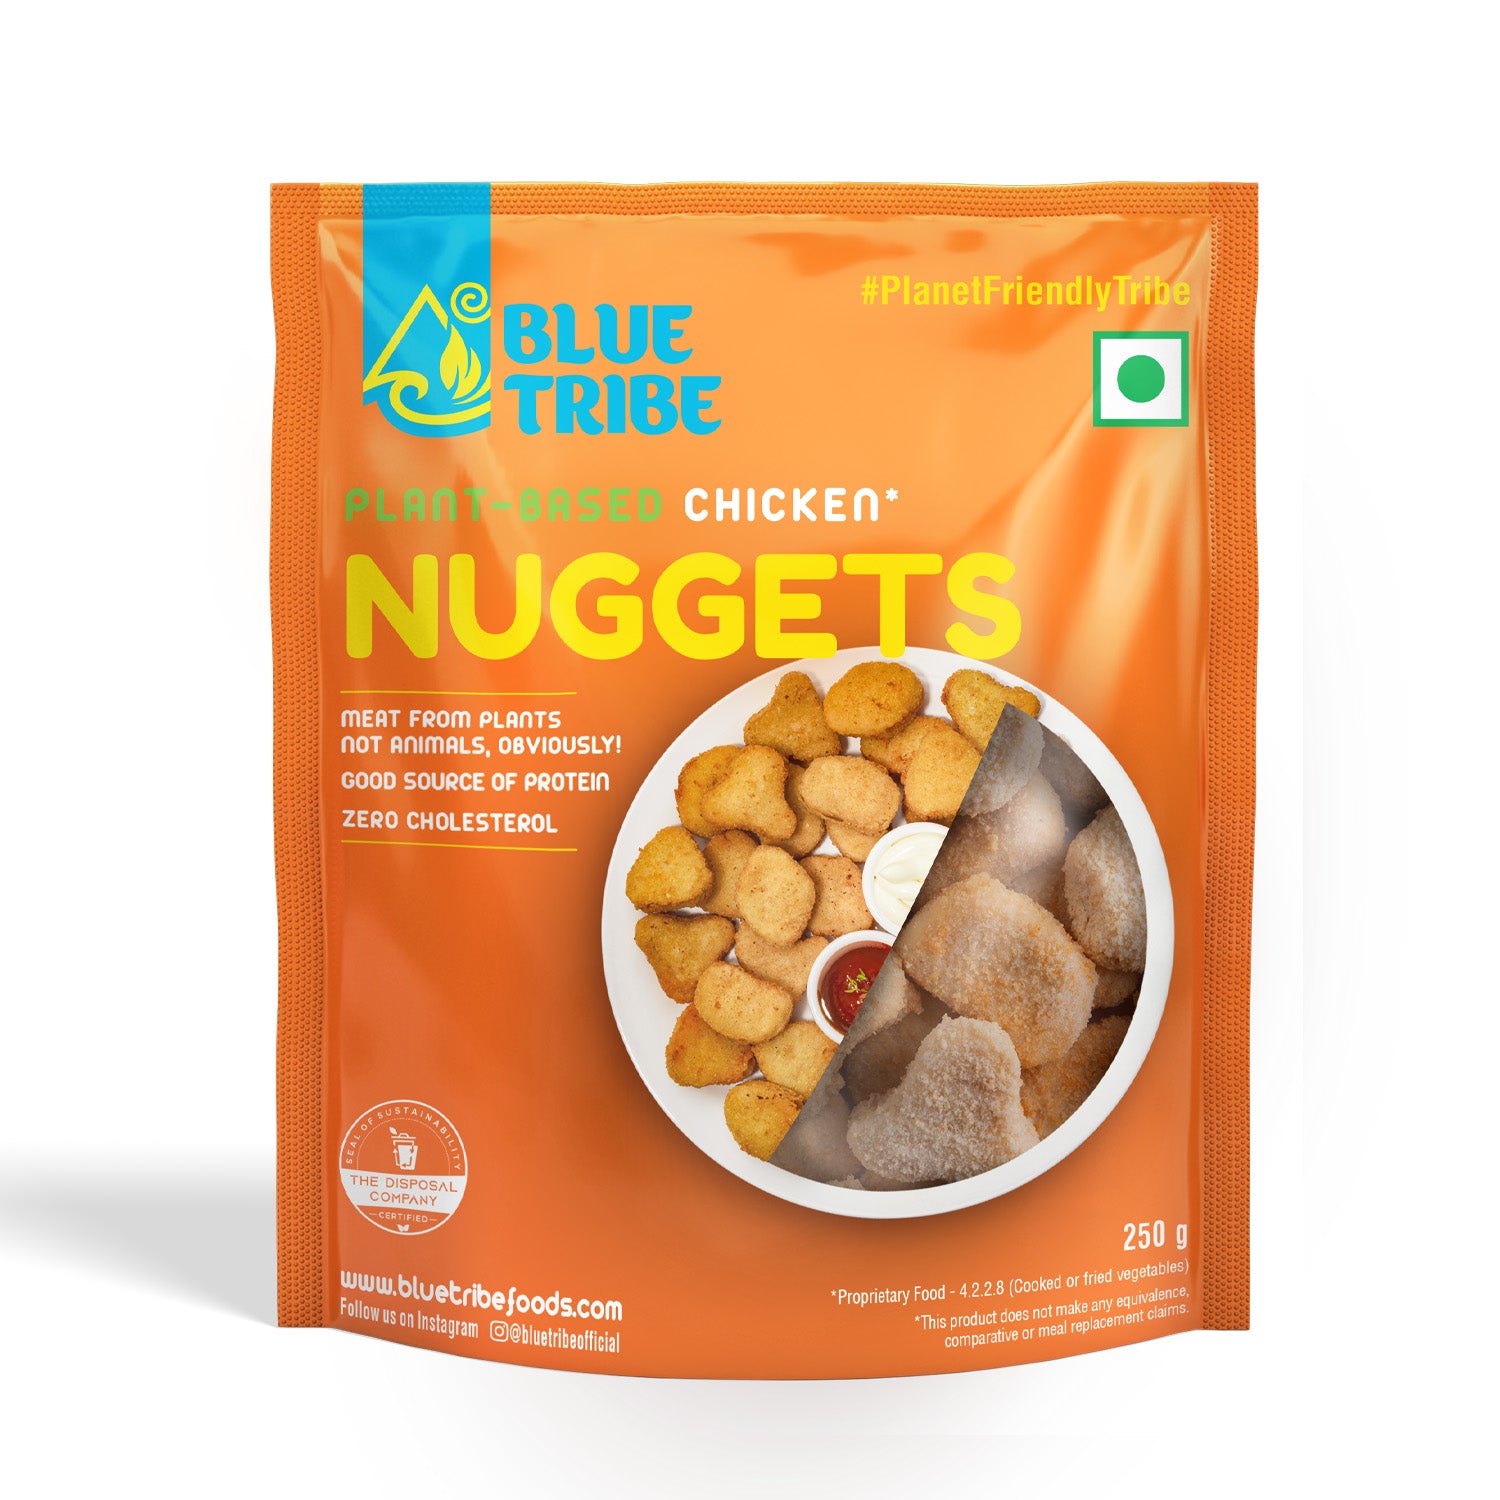 BLUE TRIBE Plant-Based Chicken Nuggets, 250g, Vegan